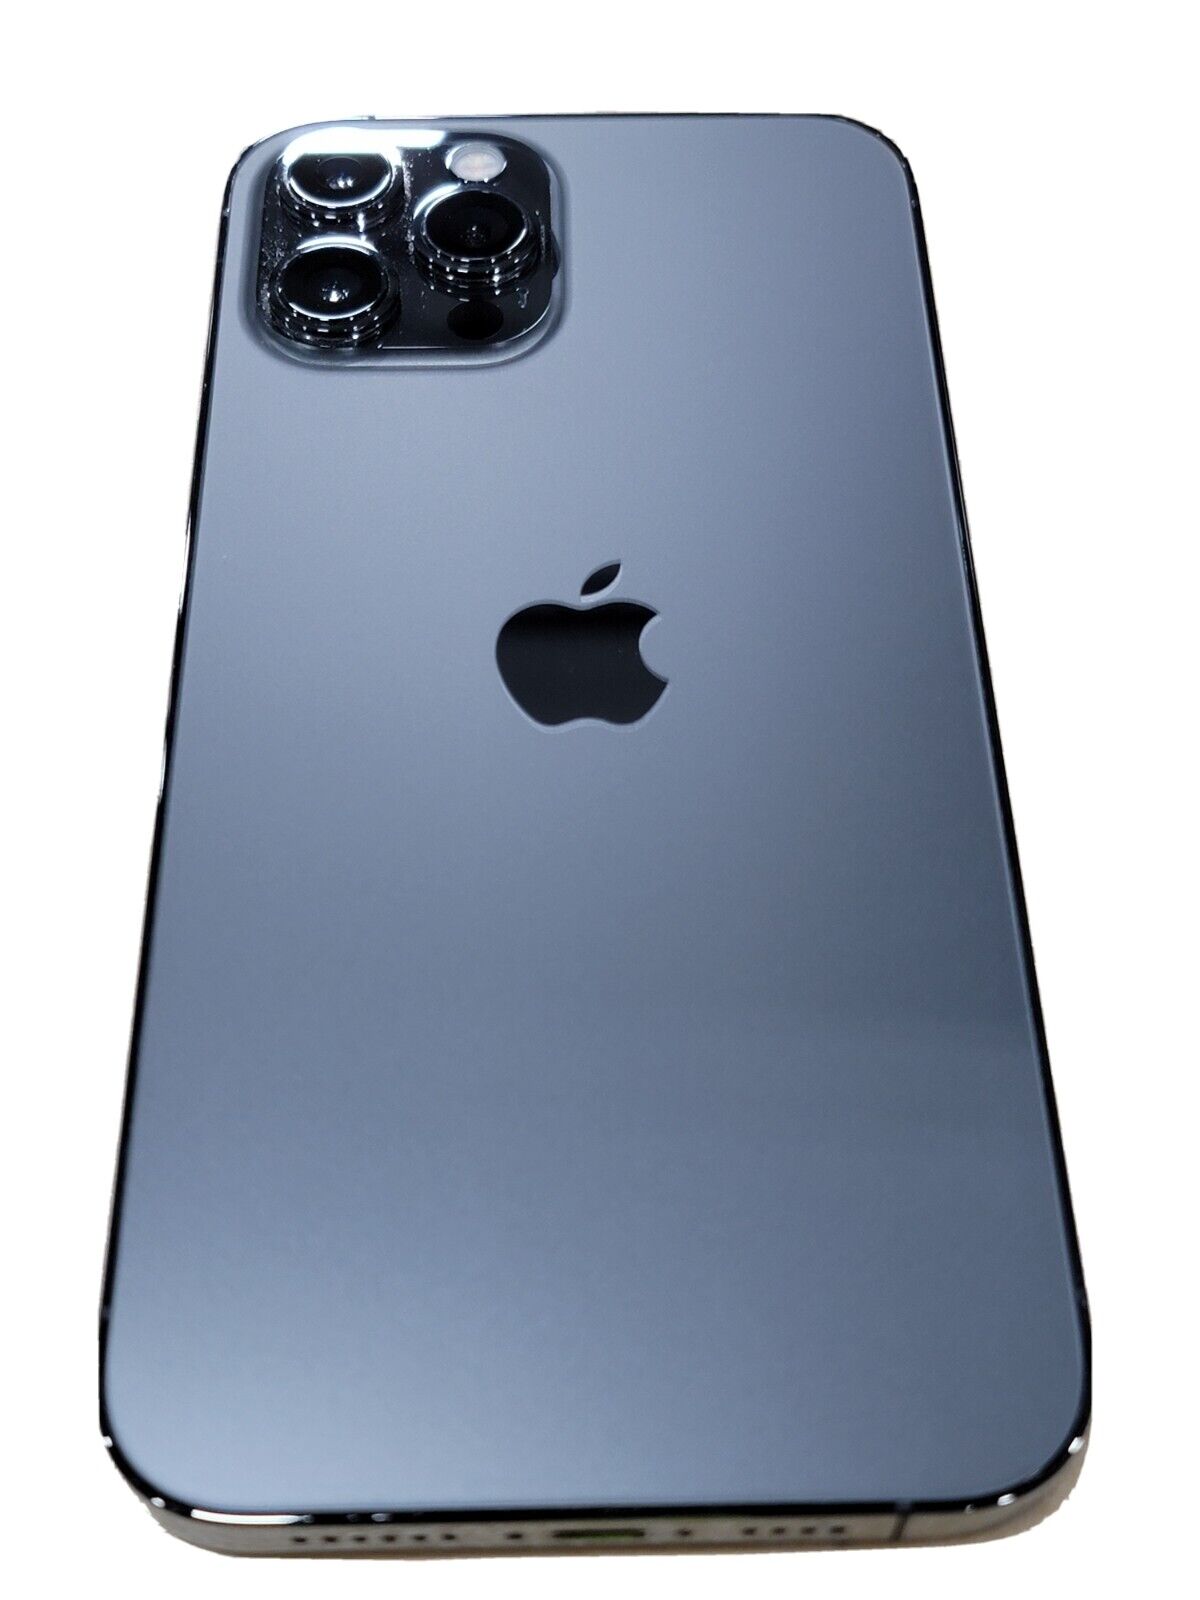 Apple iPhone 12 Pro Max - 128GB - Graphite (Unlocked) for Sale